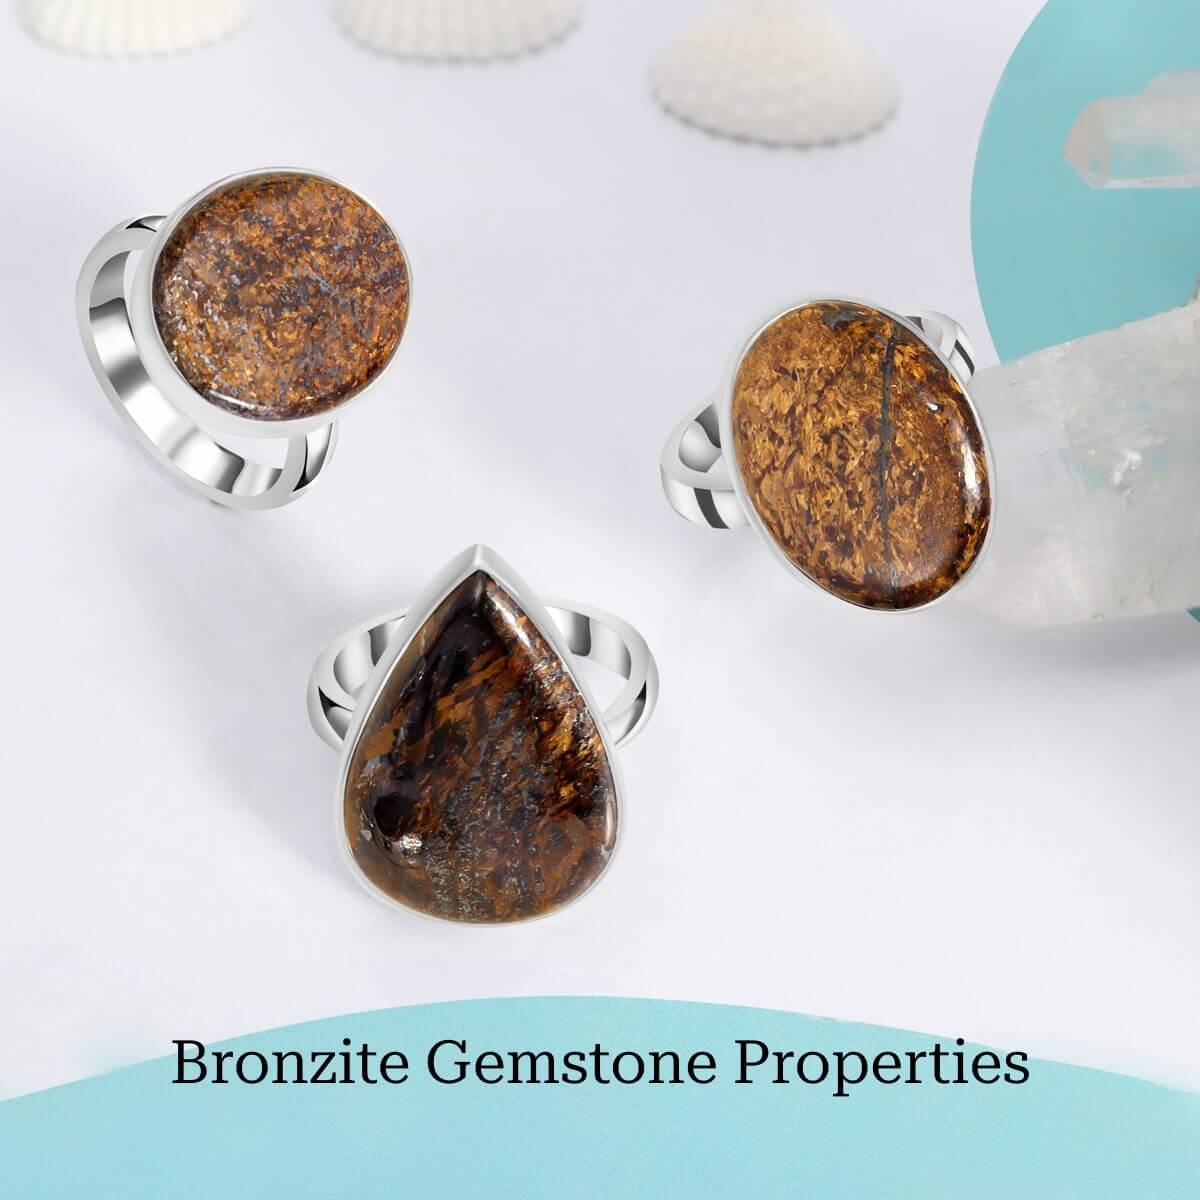 Healing properties of Bronzite